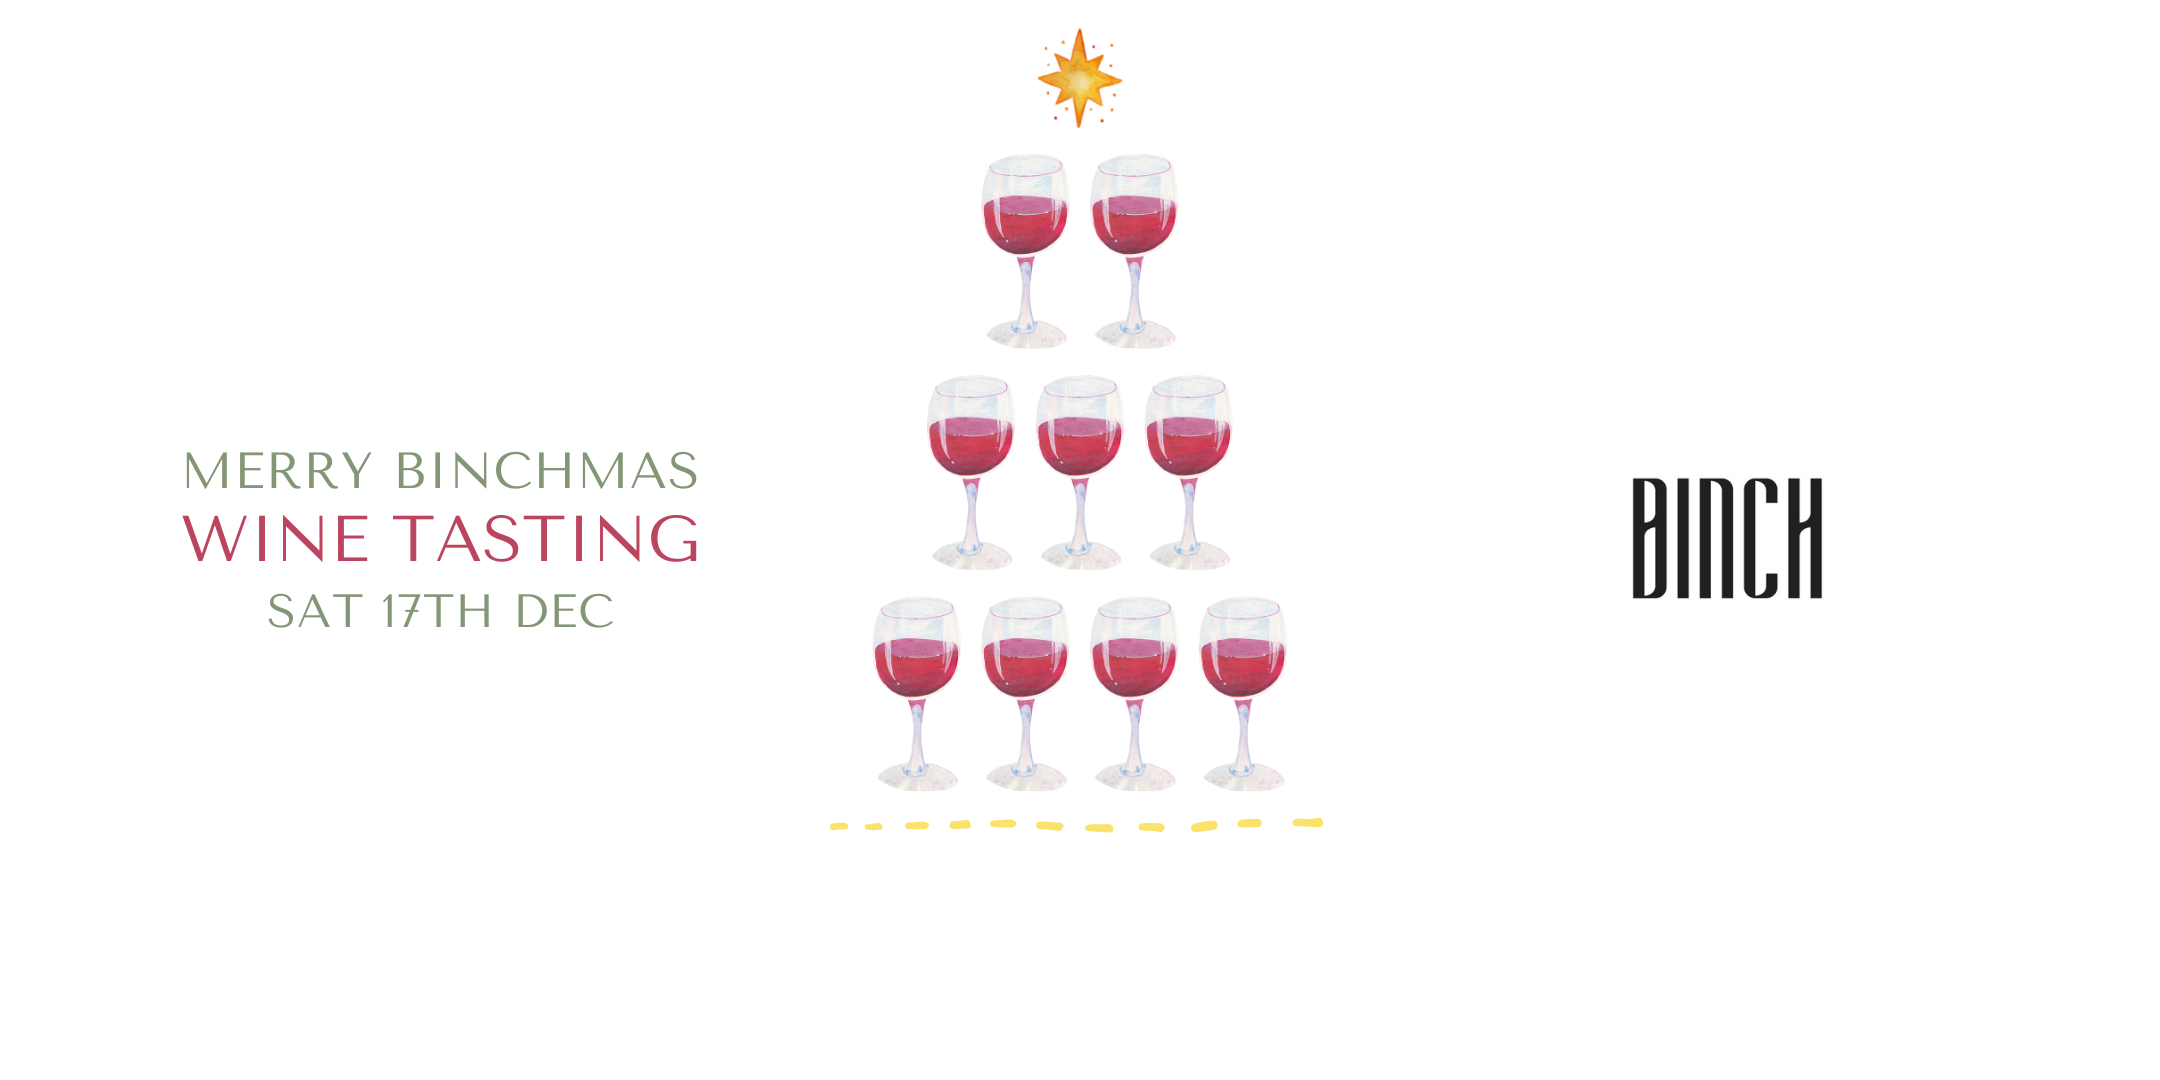 Merry Binchmas Wine Tasting